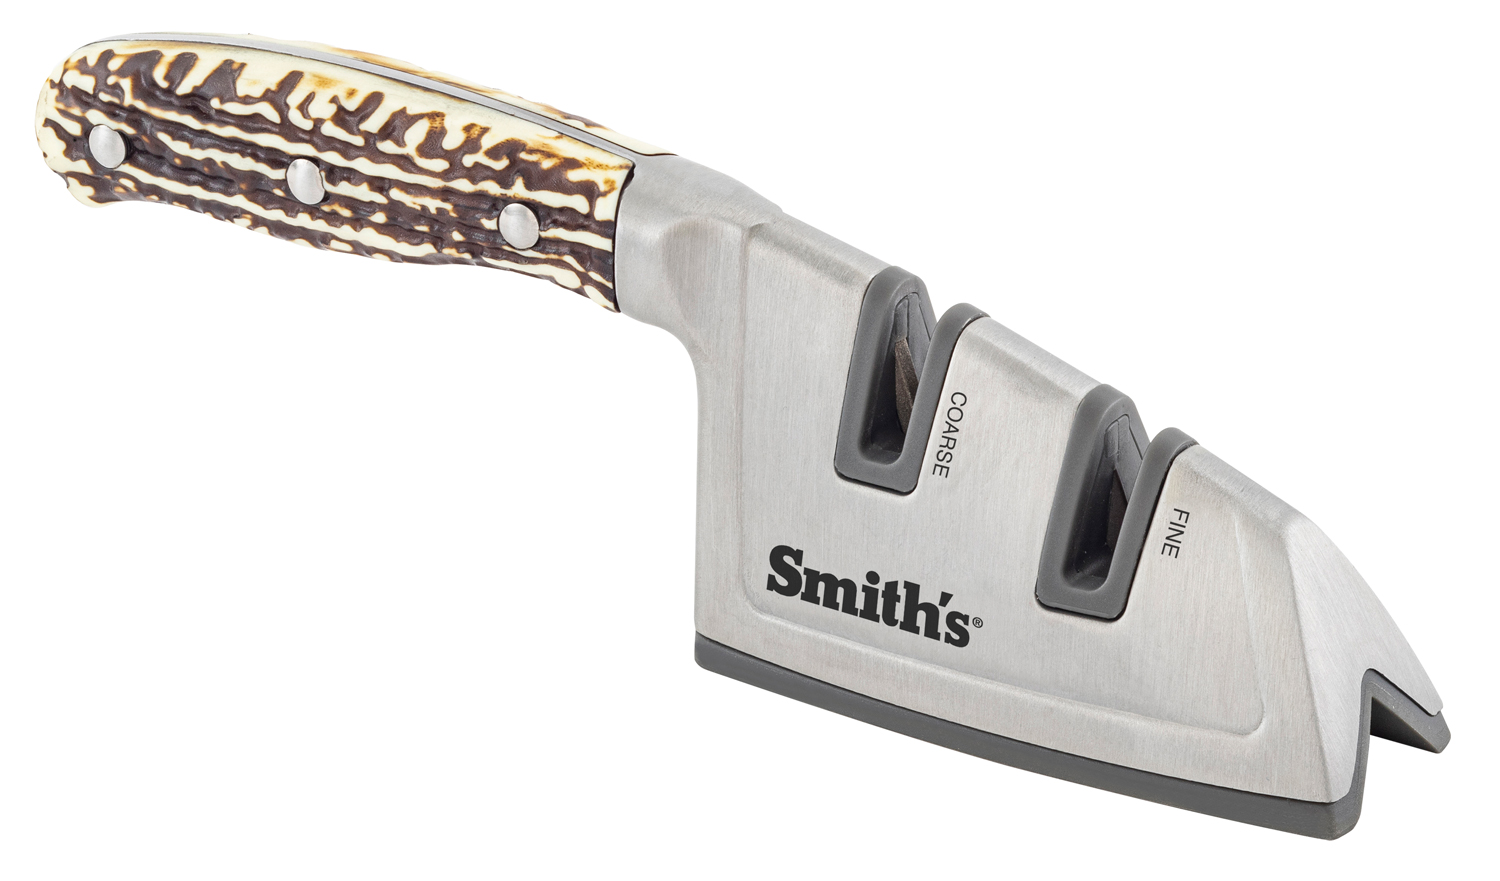 Smith's Edge Stick Sharpener